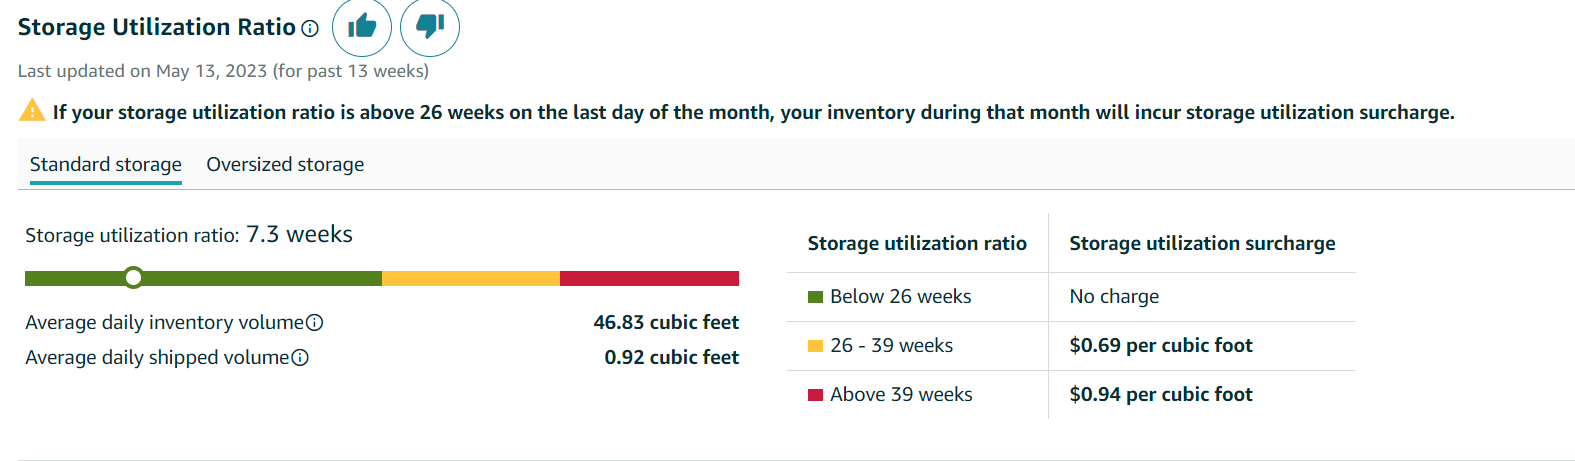 Storage Utilization Ratio